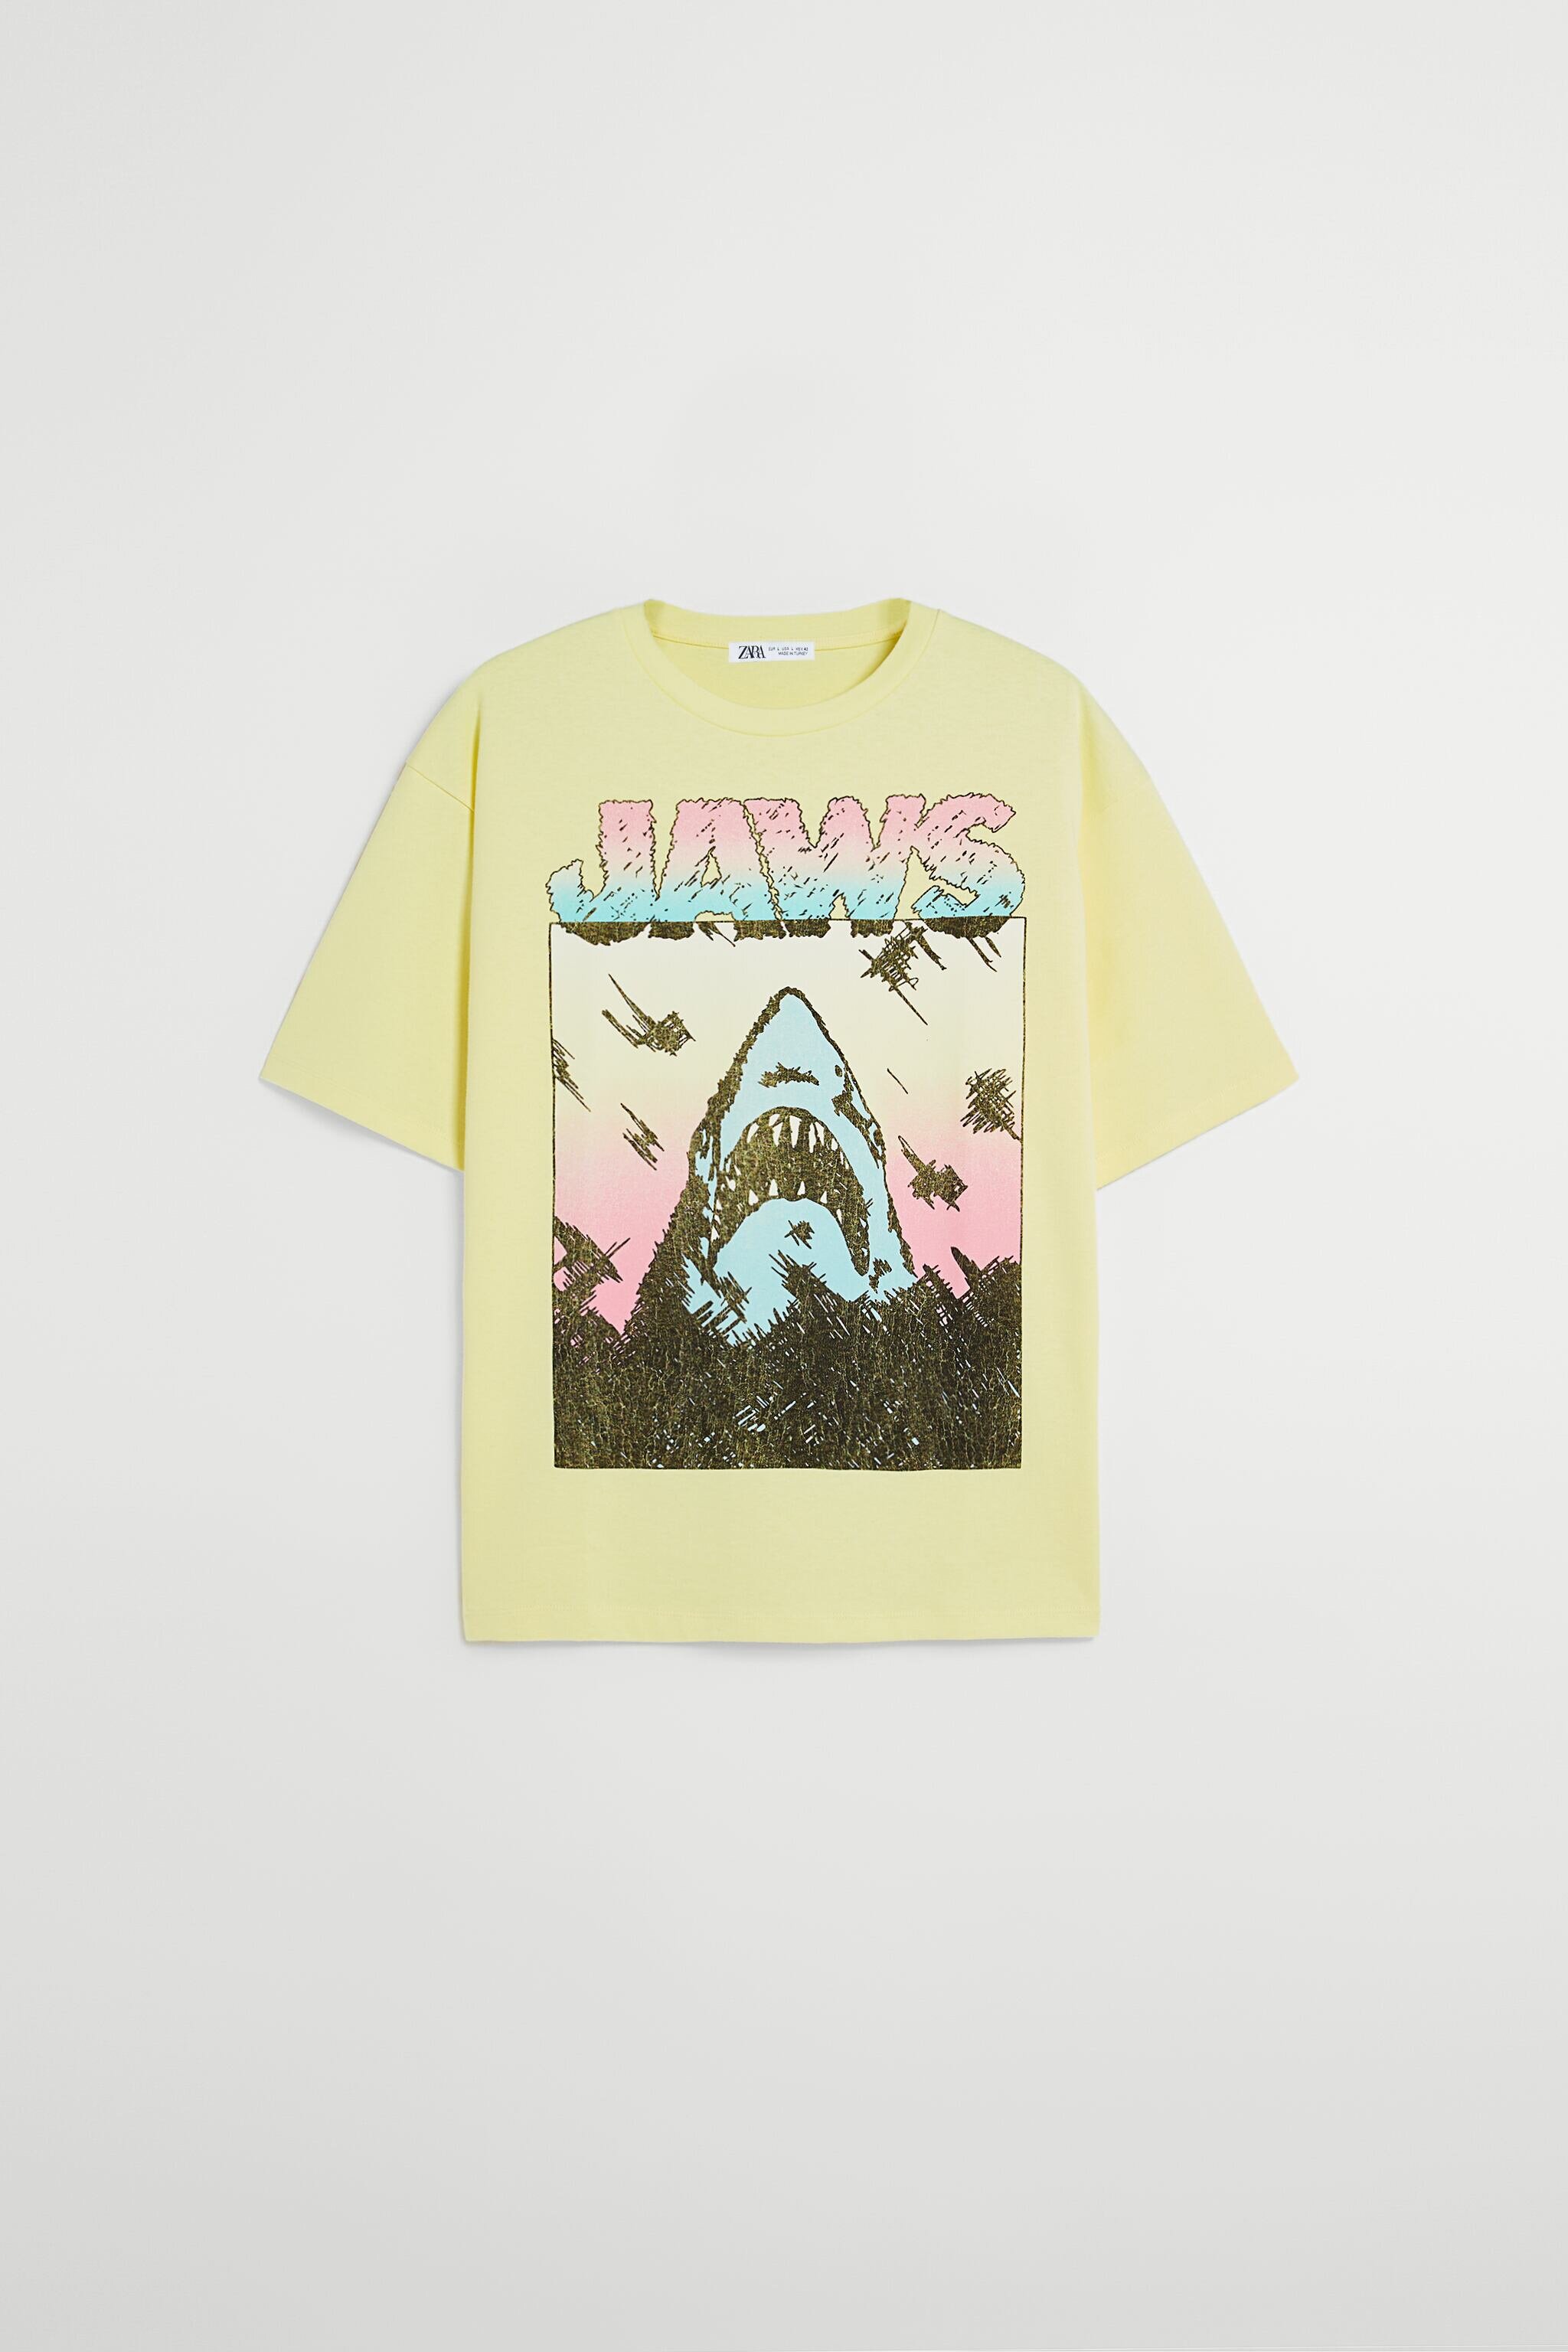 Jaws Universal T-Shirt, ₱1,295